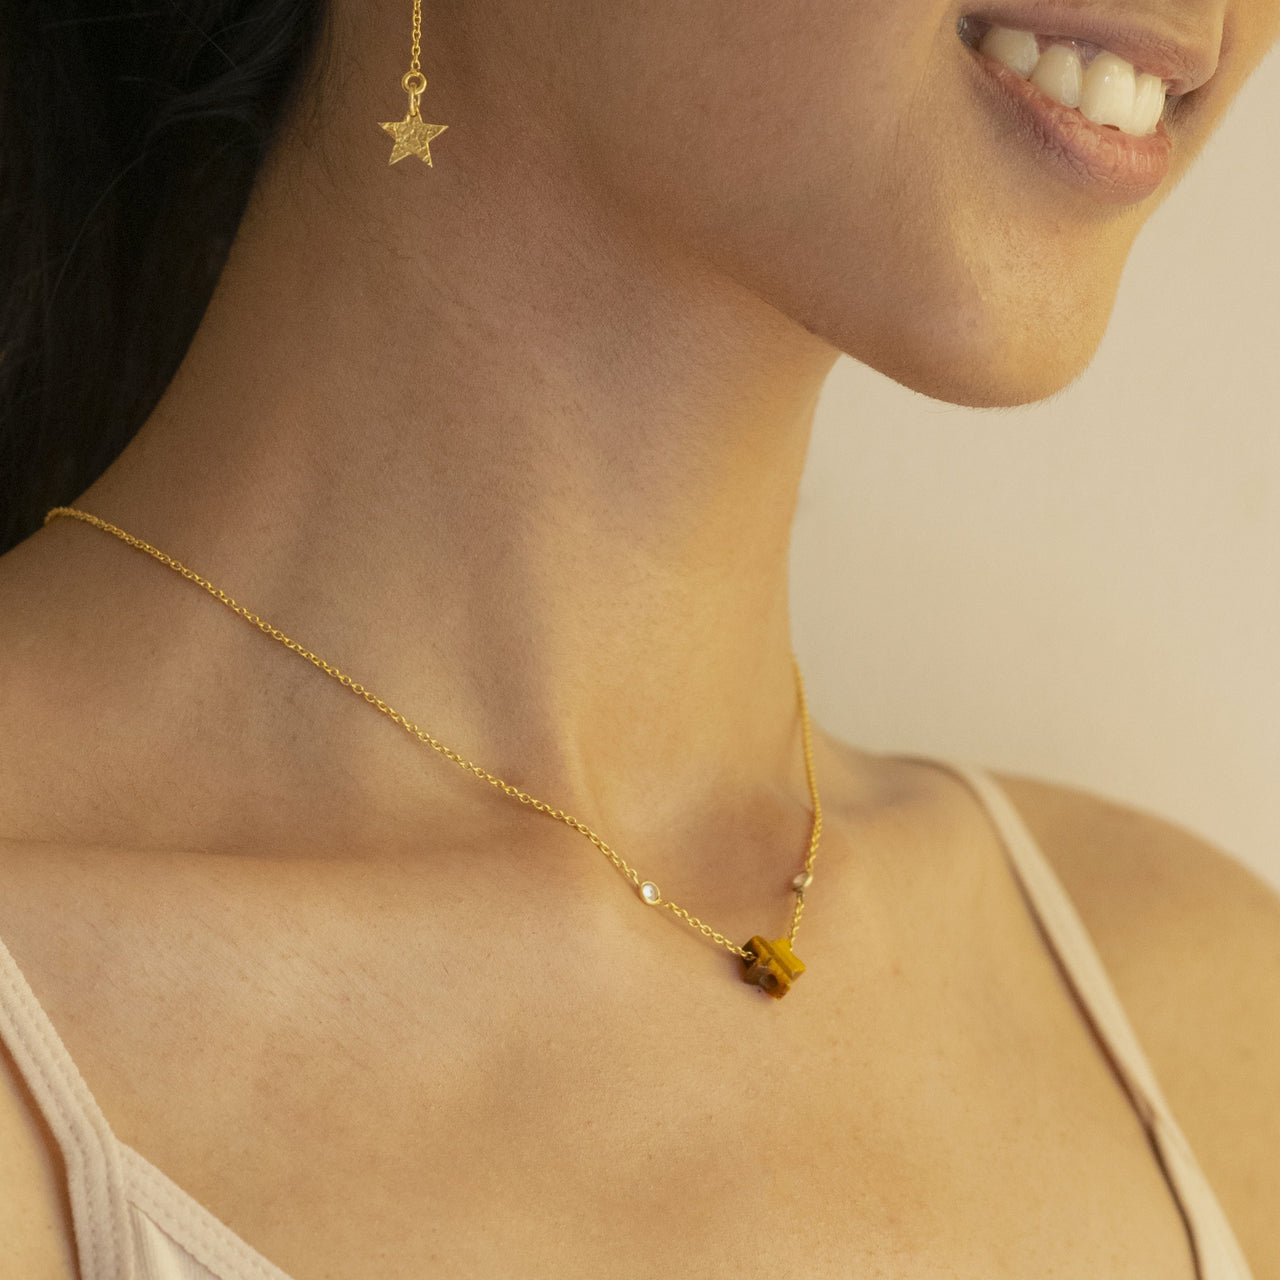 Simple elegant gold necklace designs,